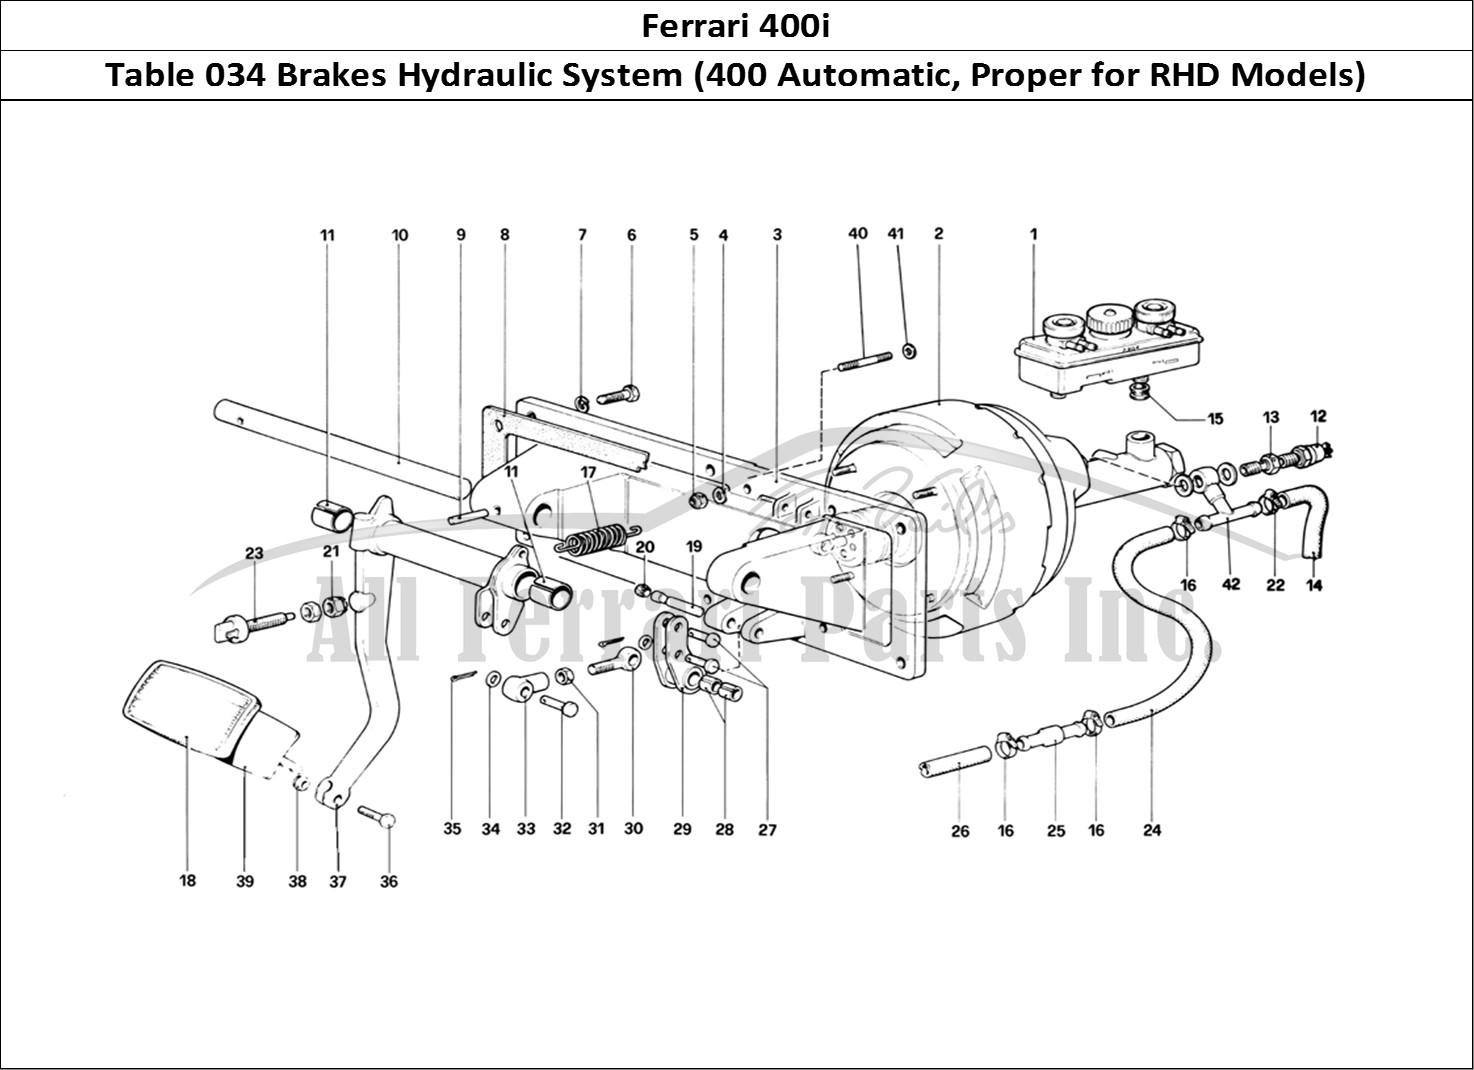 Ferrari Parts Ferrari 400i (1983 Mechanical) Page 034 Brakes Hydraulic Controll